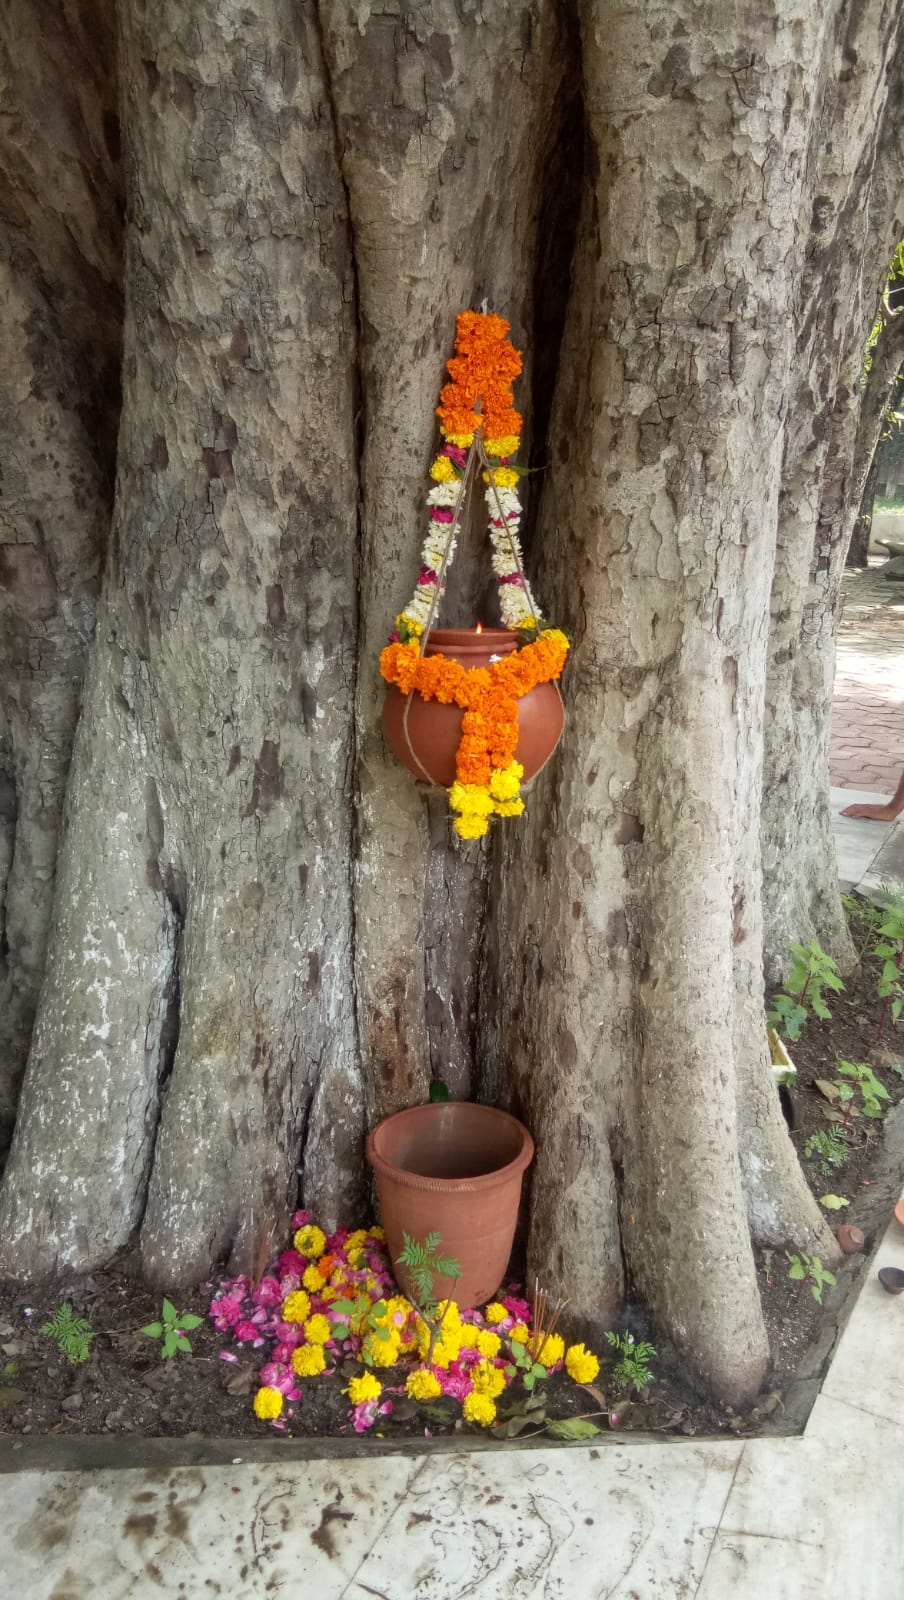 Pot hanging in the Place of worship near gaushala